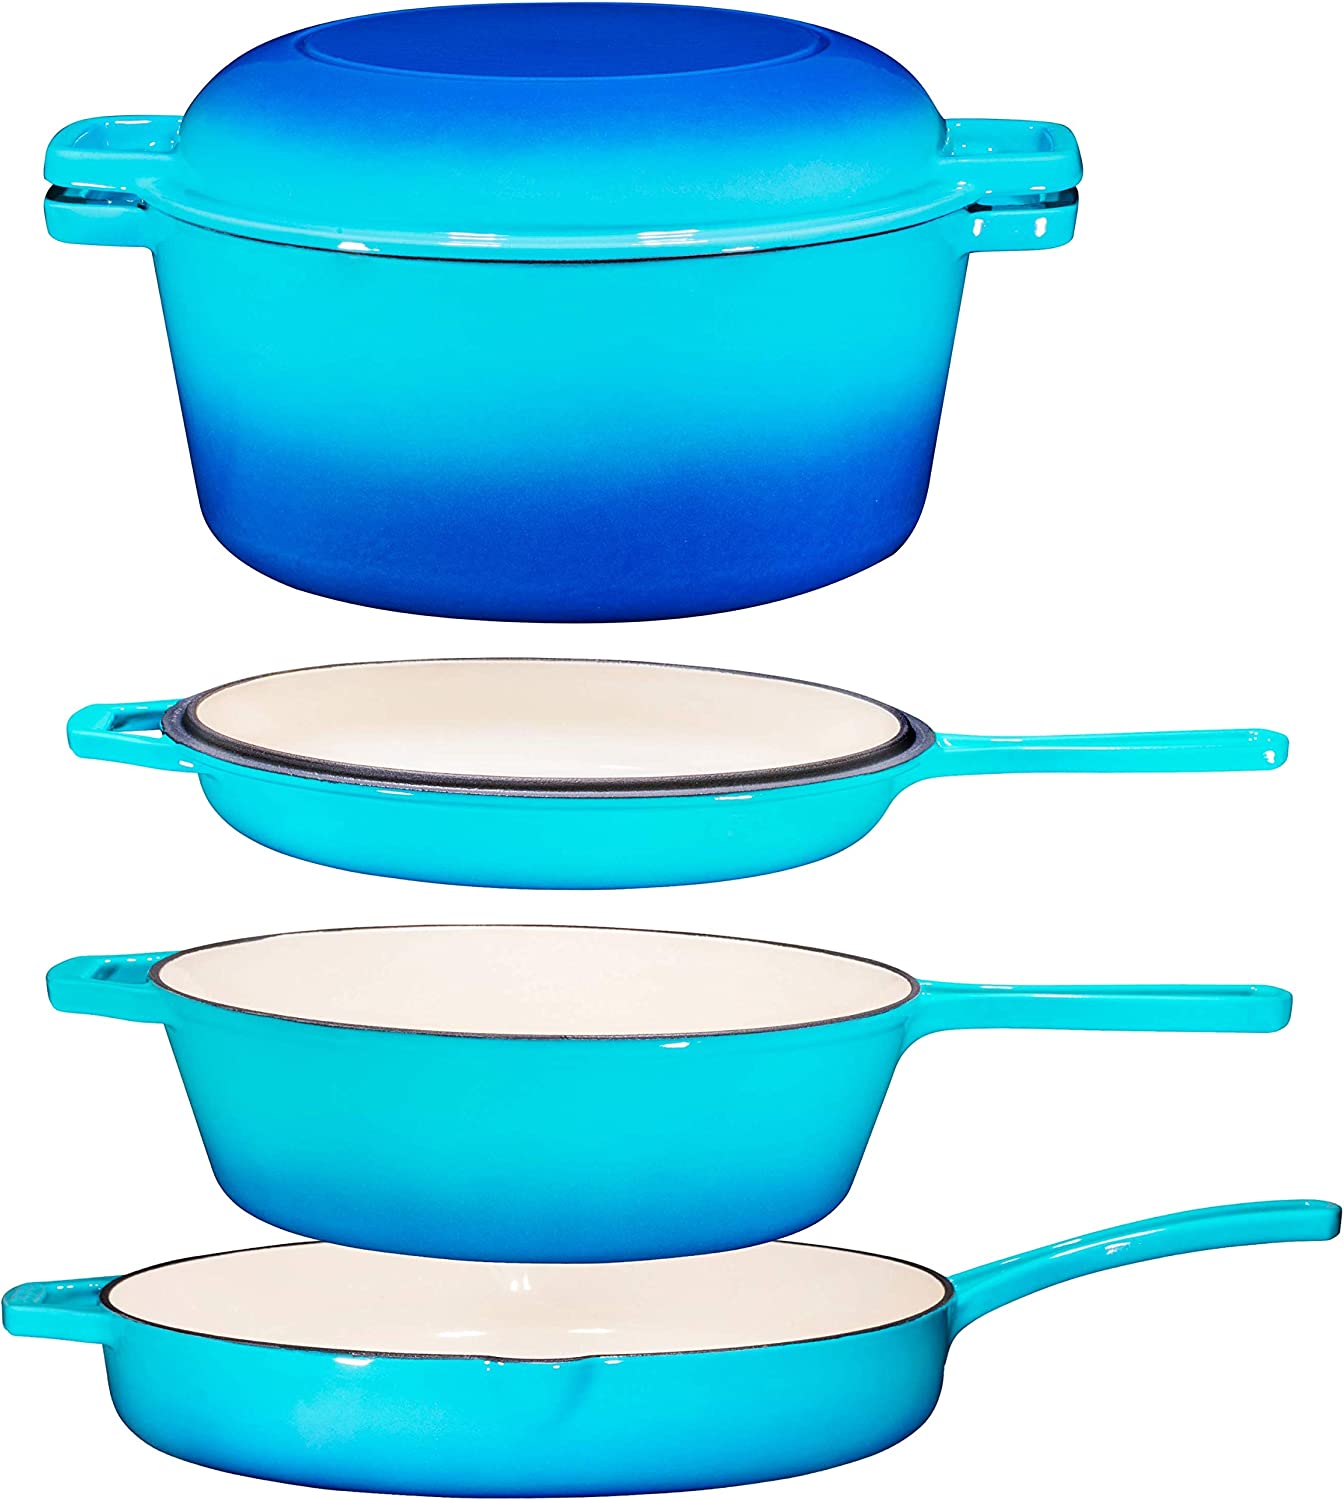 Enameled-cast-iron-cookware-set